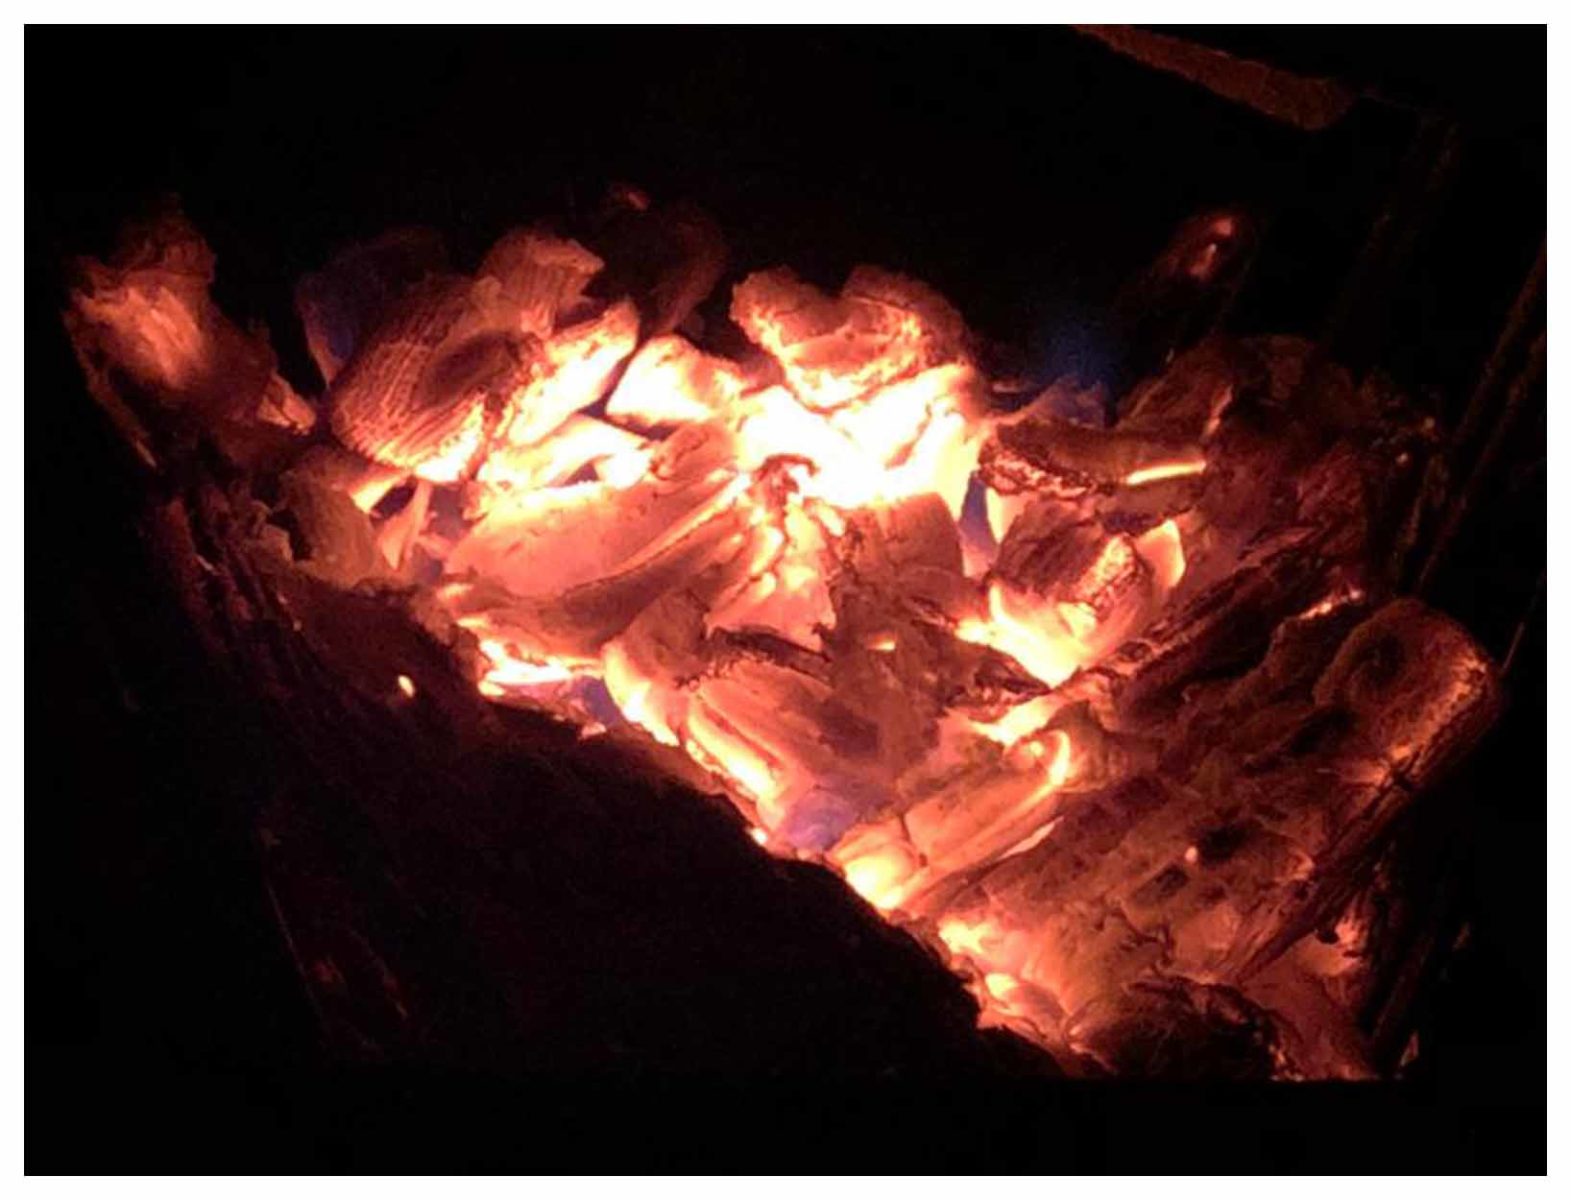 Burning wood on chiminea